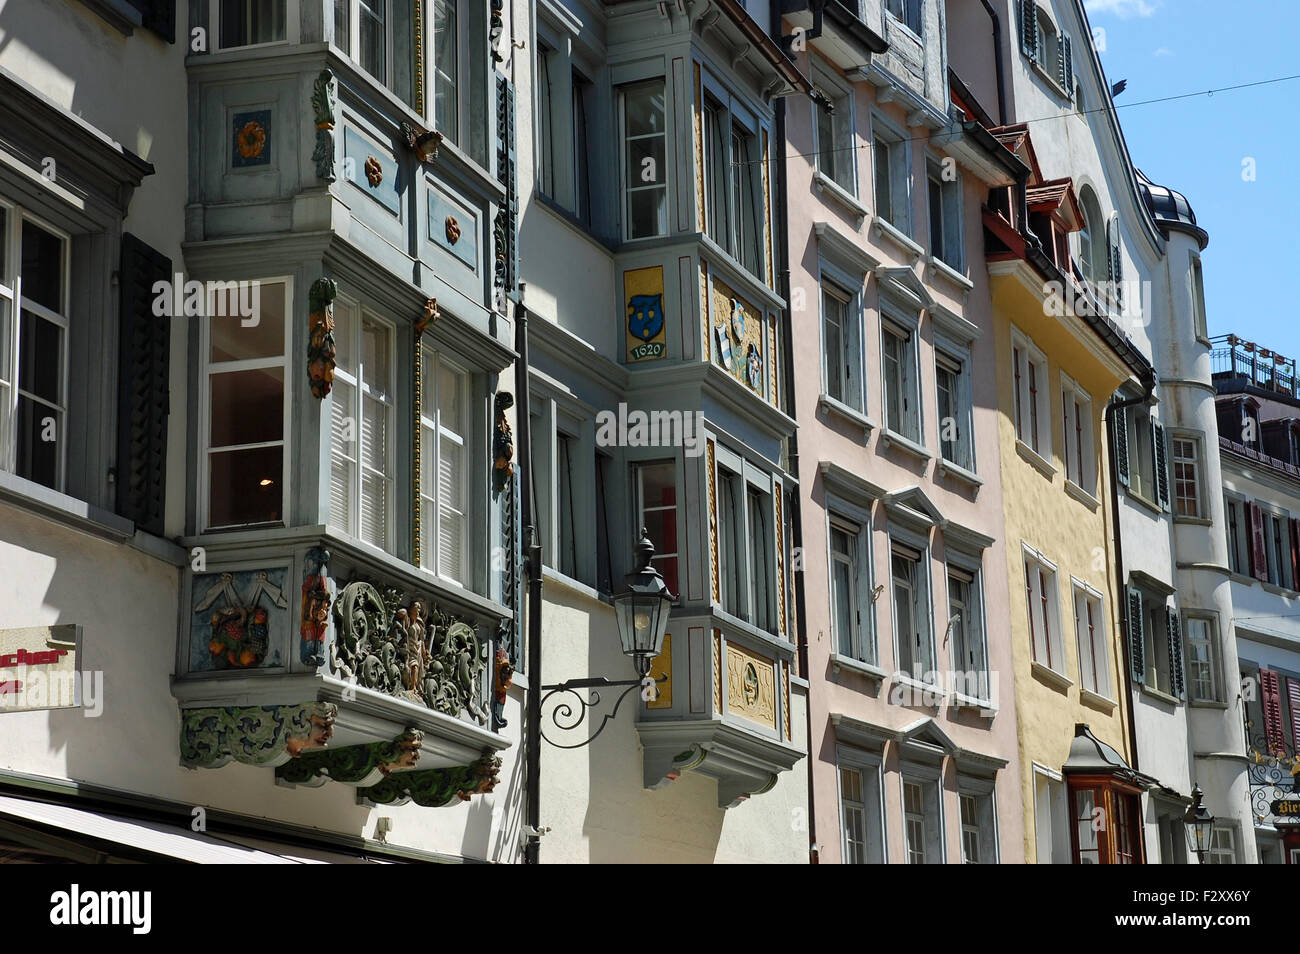 Fassade mit Erker Fenster in Sankt Gallen, Schweiz Stockfotografie - Alamy